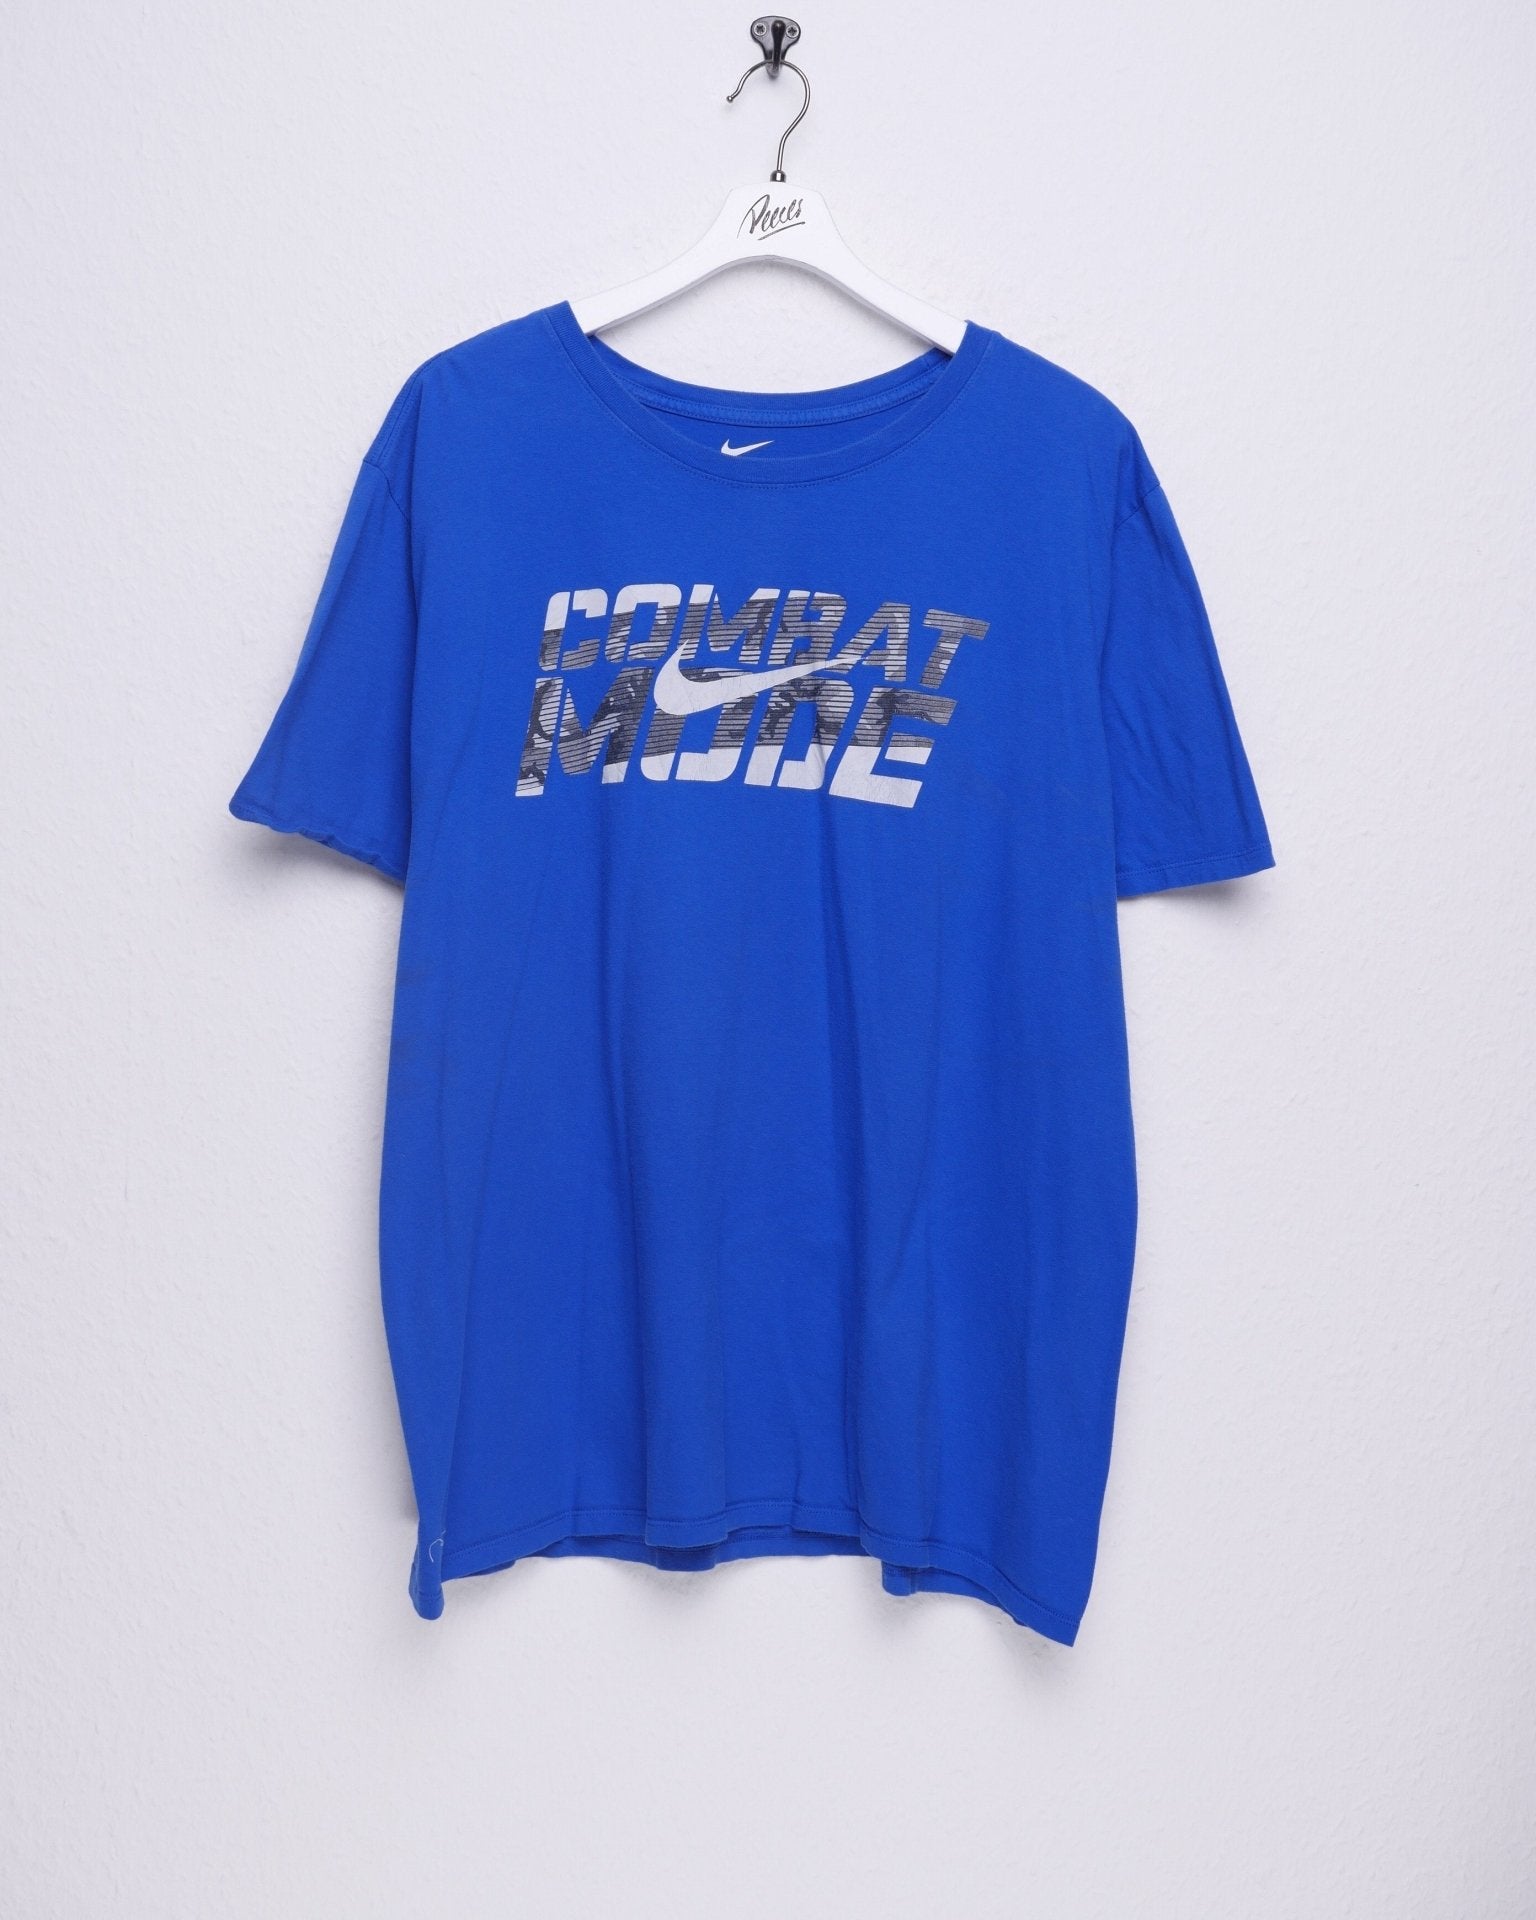 nike Combat Mode printed Swoosh blue Shirt - Peeces